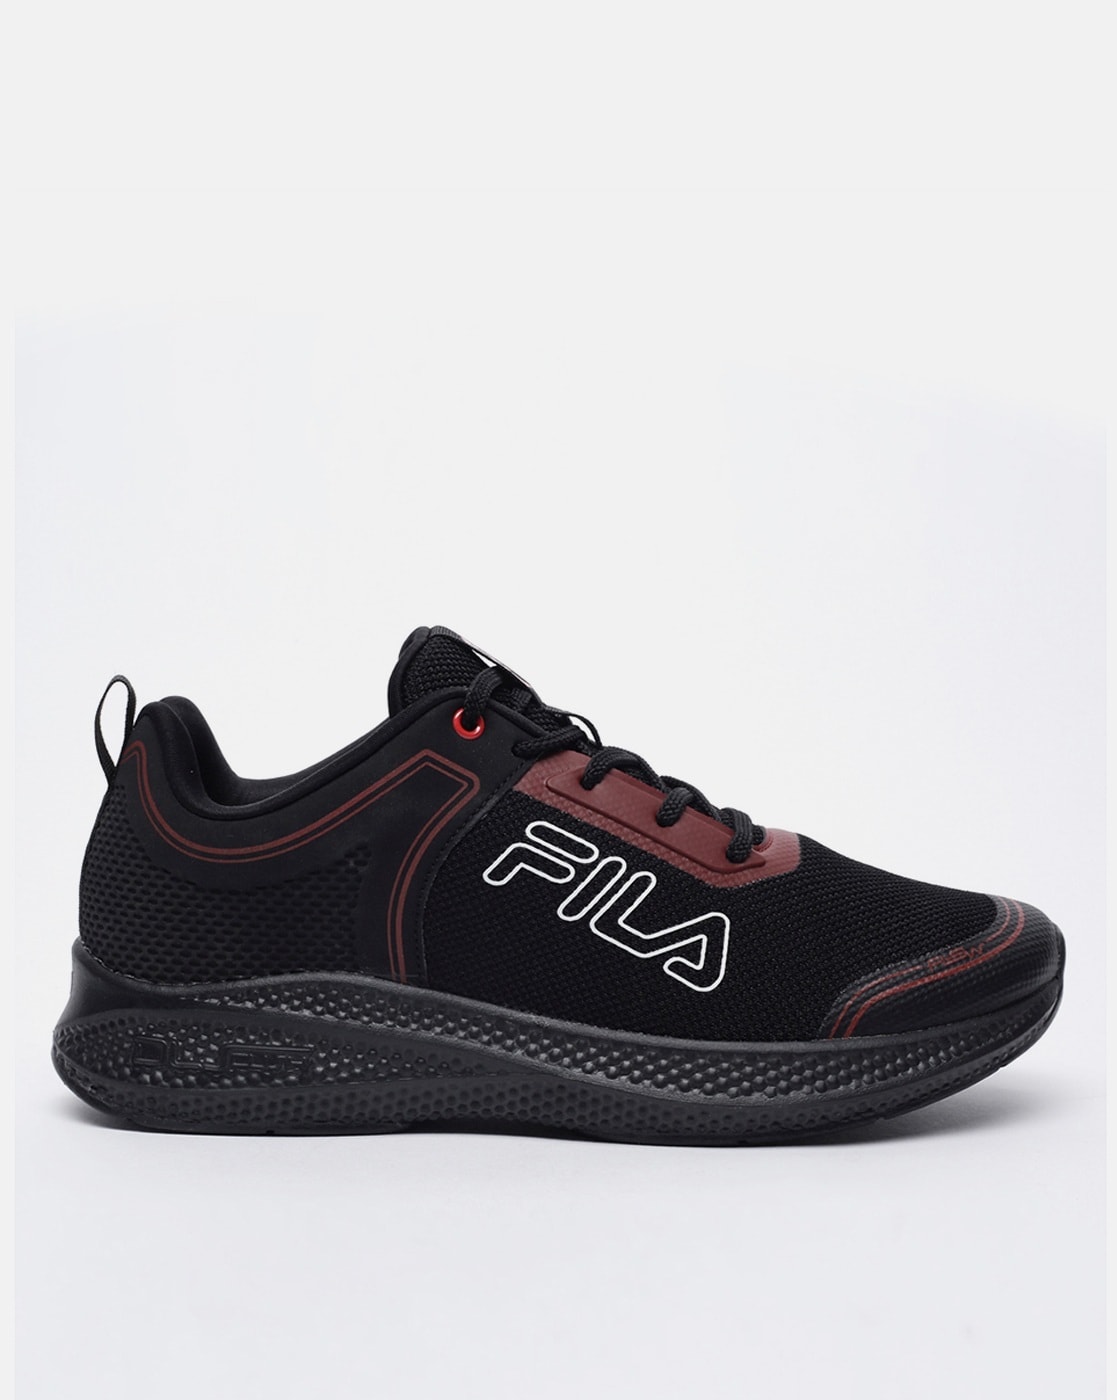 Fila Men's Disruptor II Custom Patch Sneakers (11.5, Black/Black/Black) -  Walmart.com